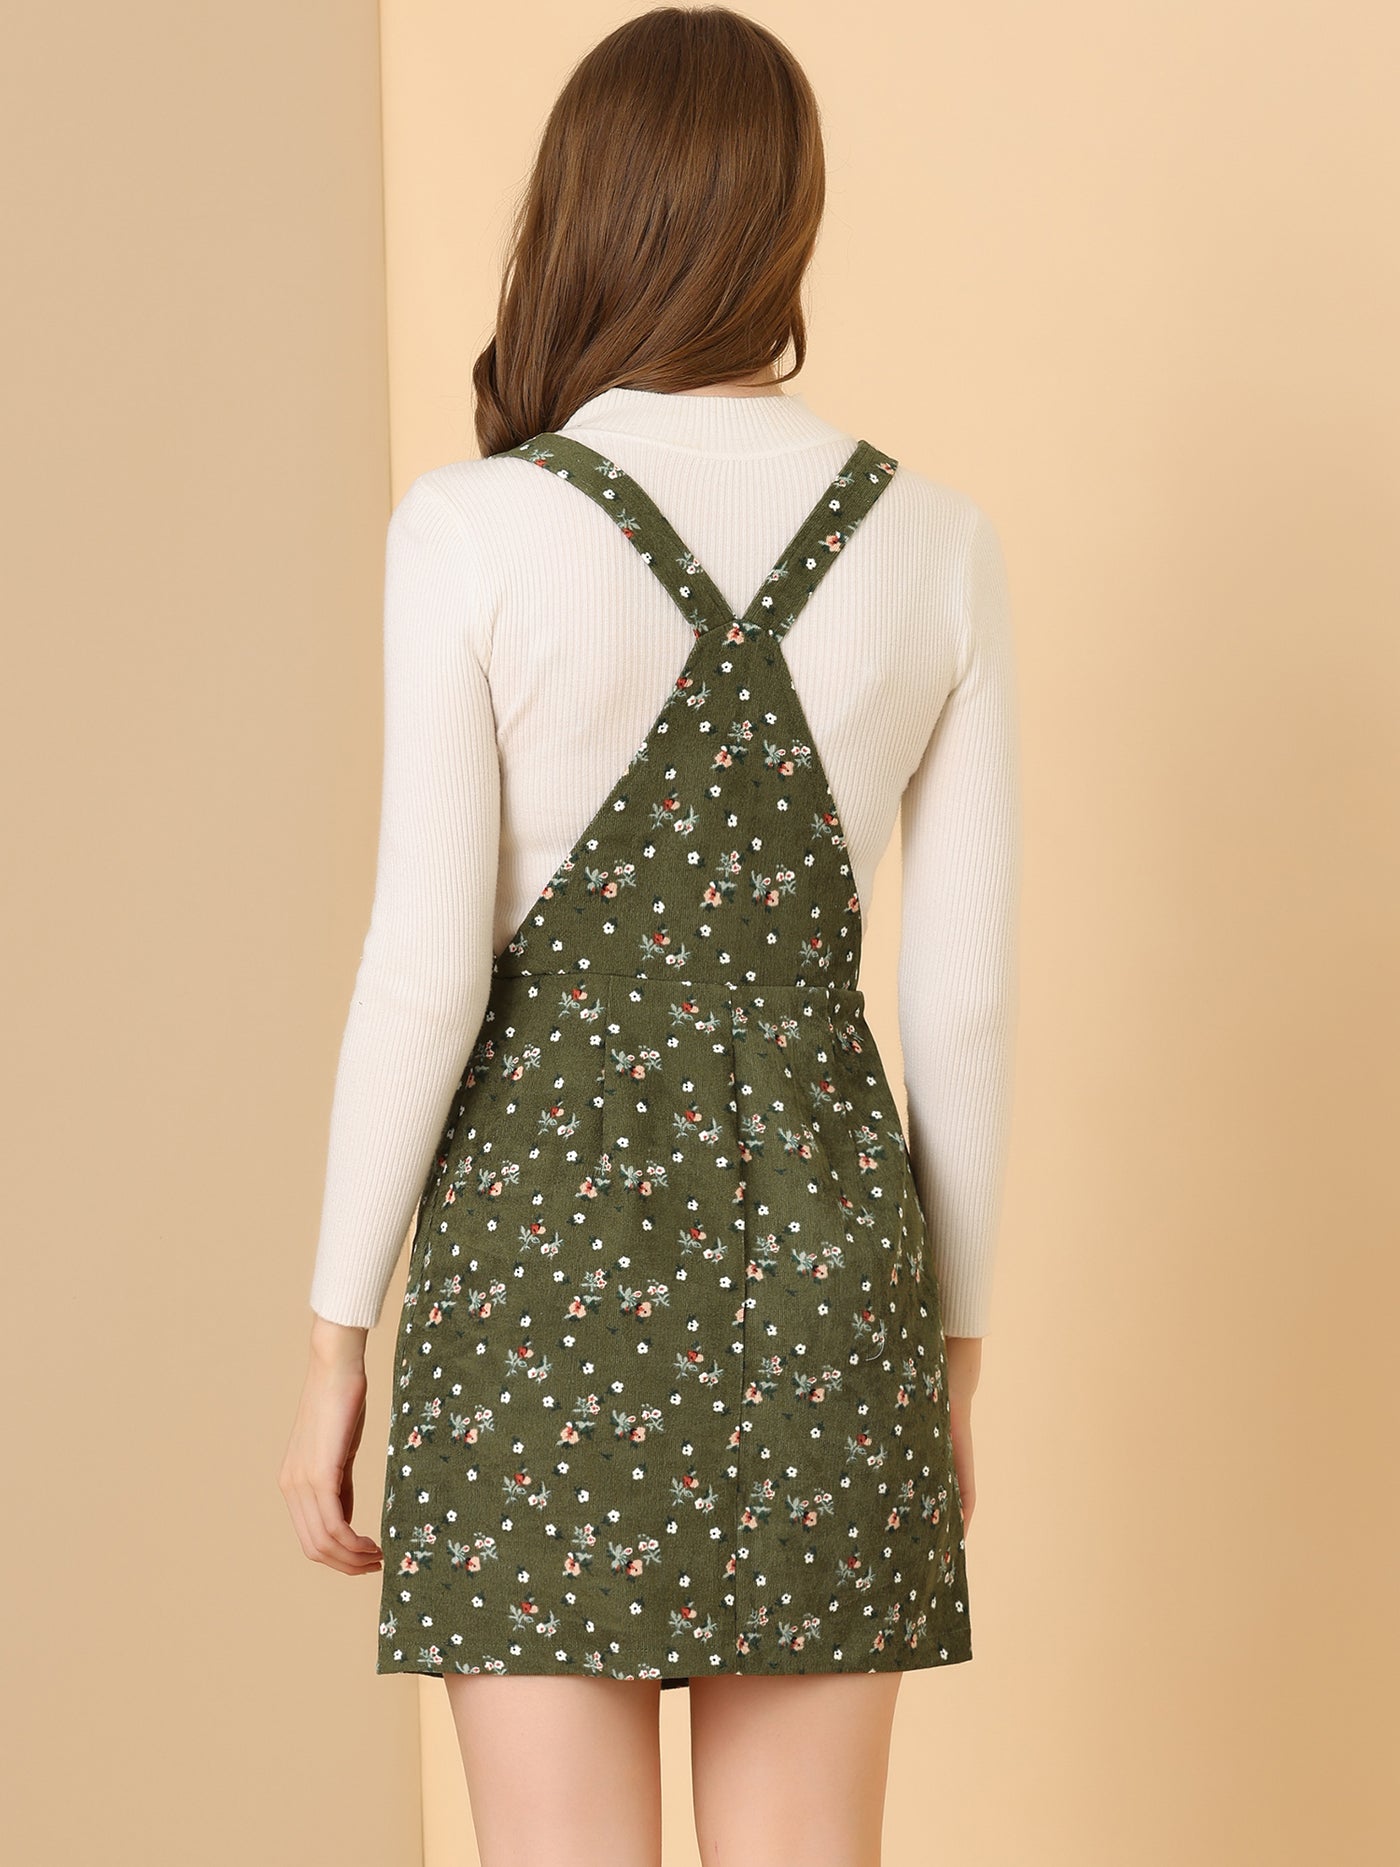 Allegra K Adjustable Strap Pinafore Corduroy Floral Bib Overalls Dress